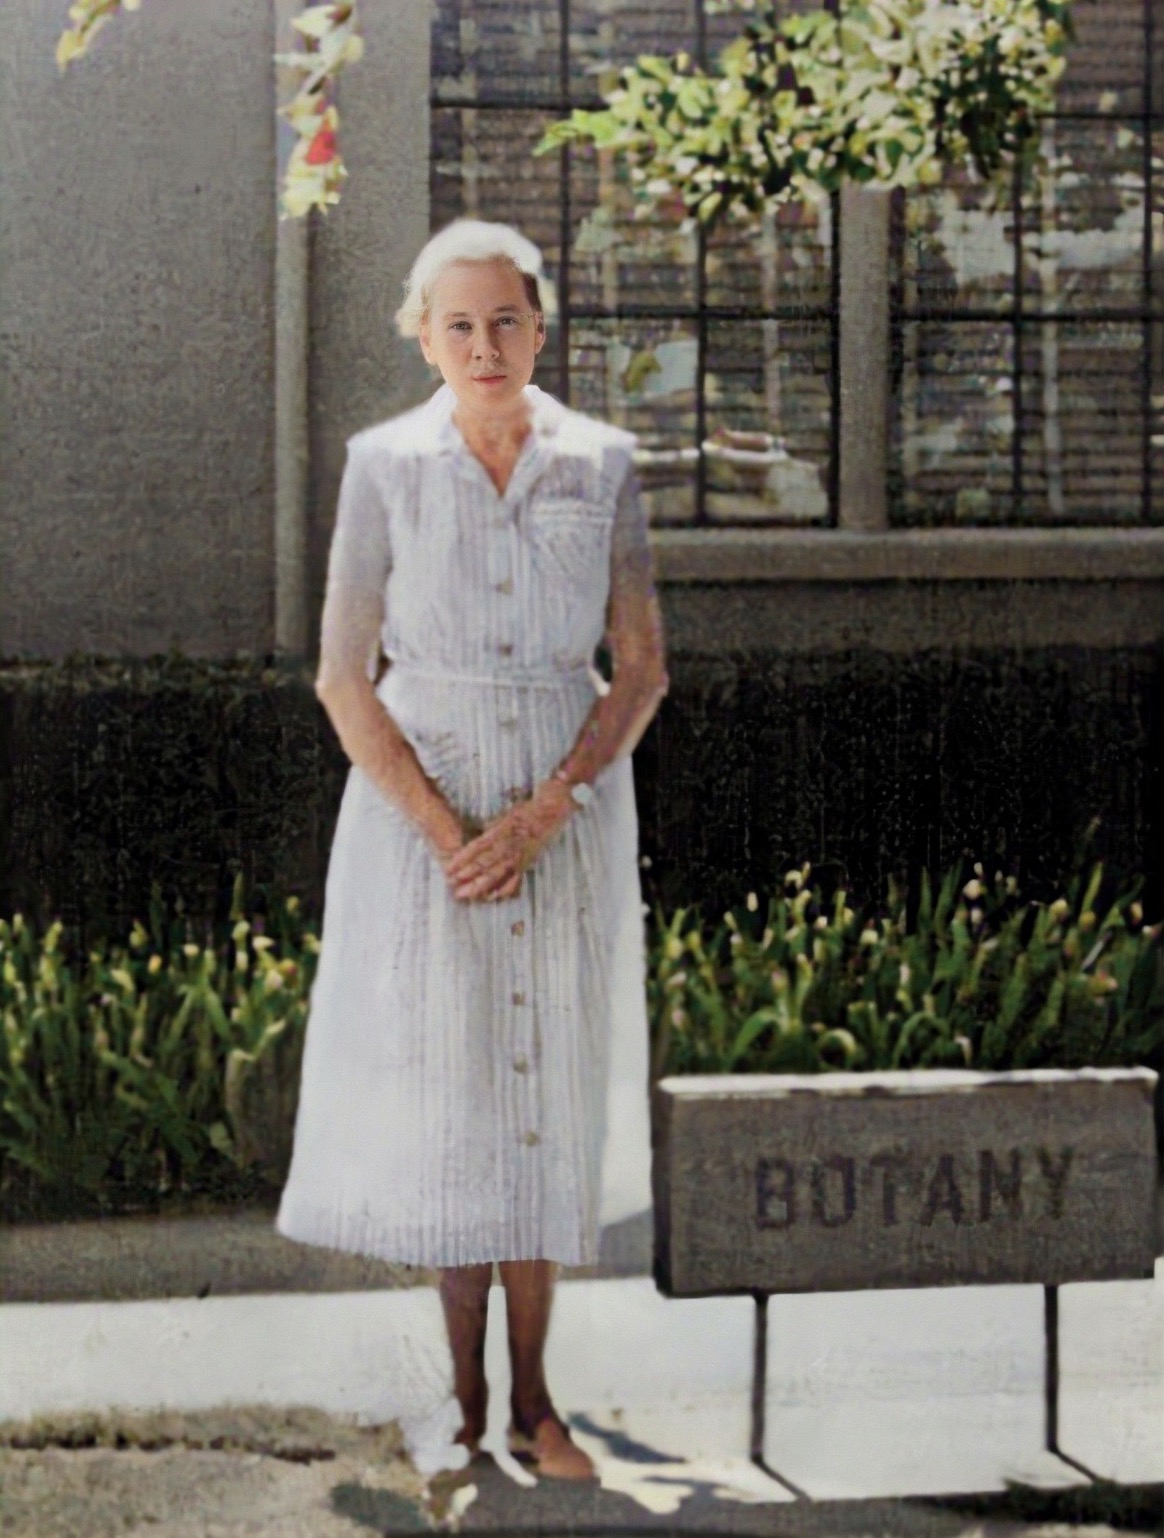 Katherine Esau by the Botany Building at UC Davis 1958.